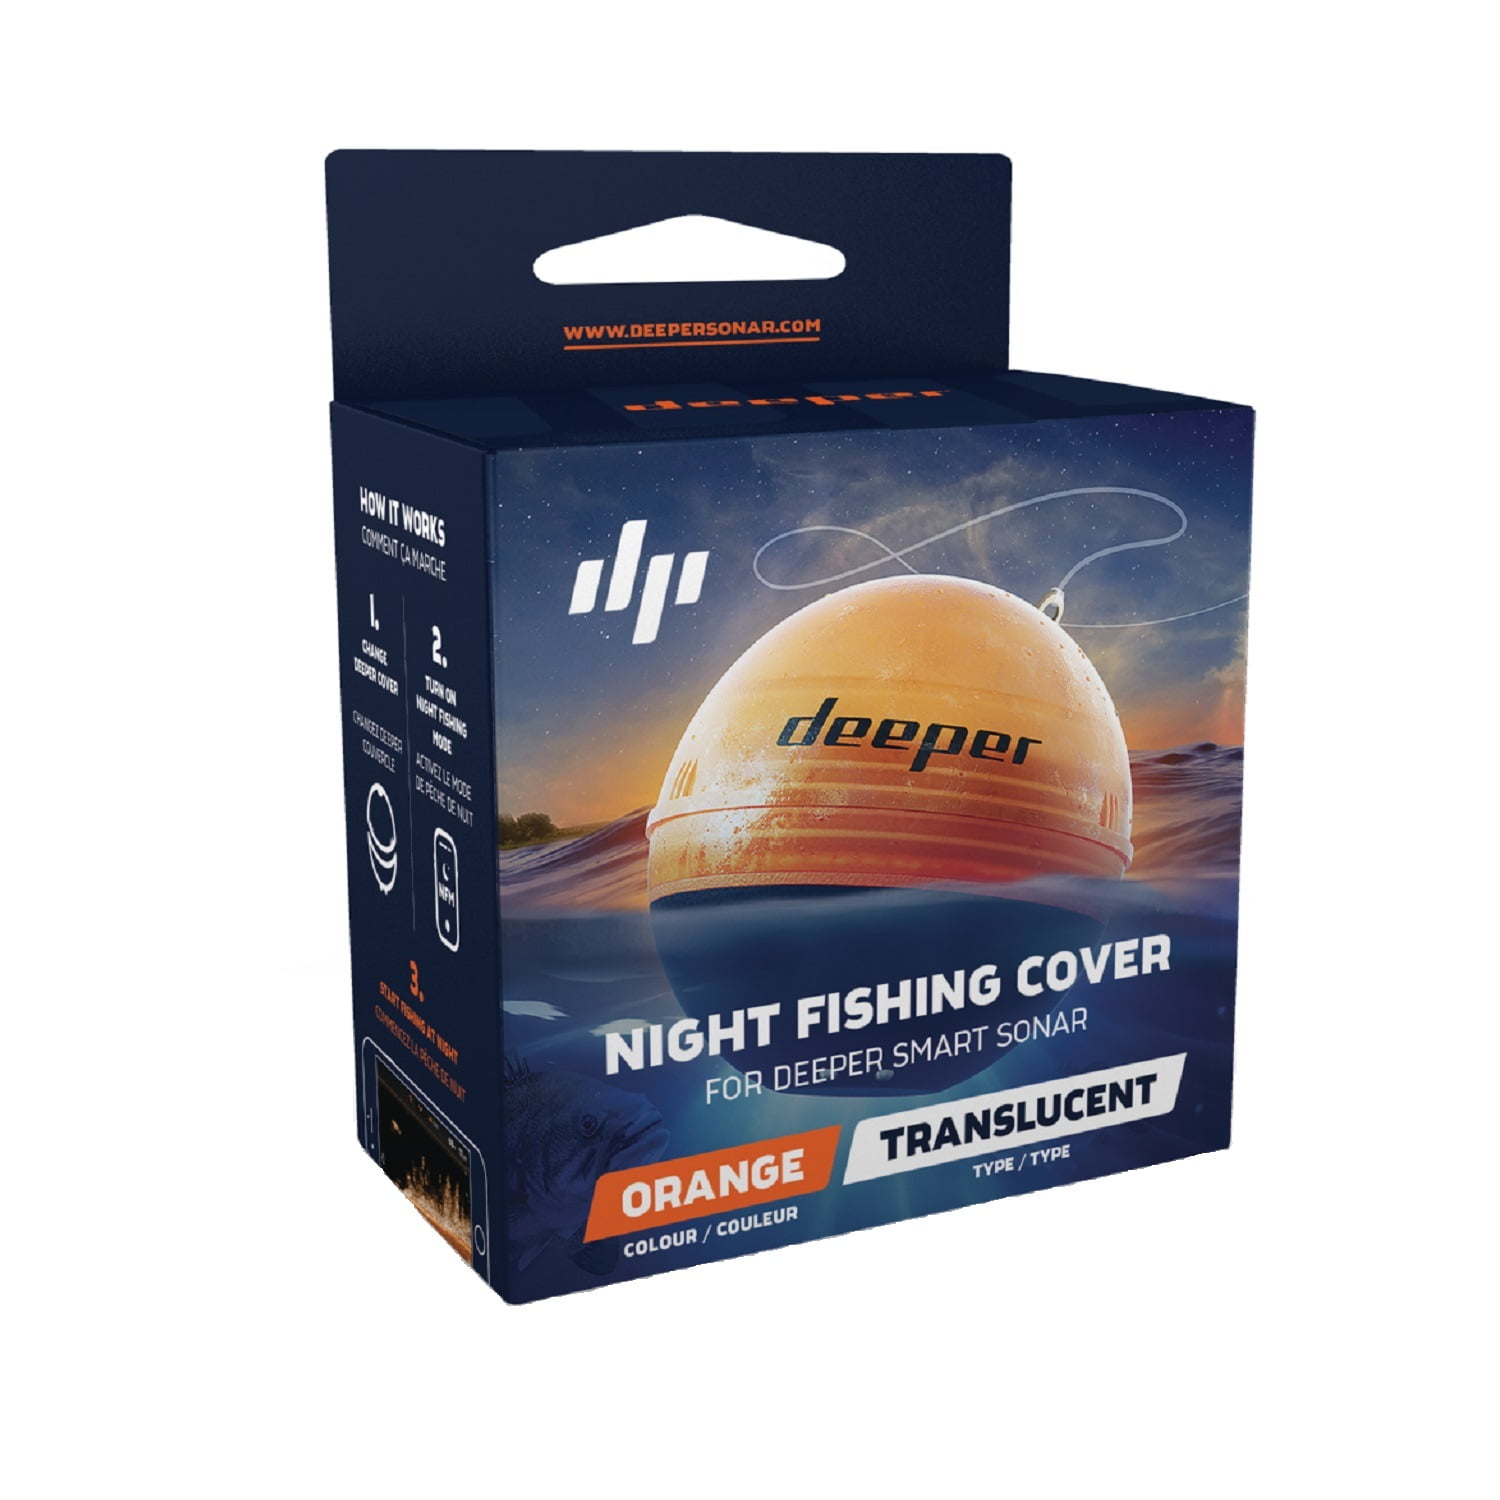 Deeper Night Fishing Translucent Orange Cover for Deeper Smart